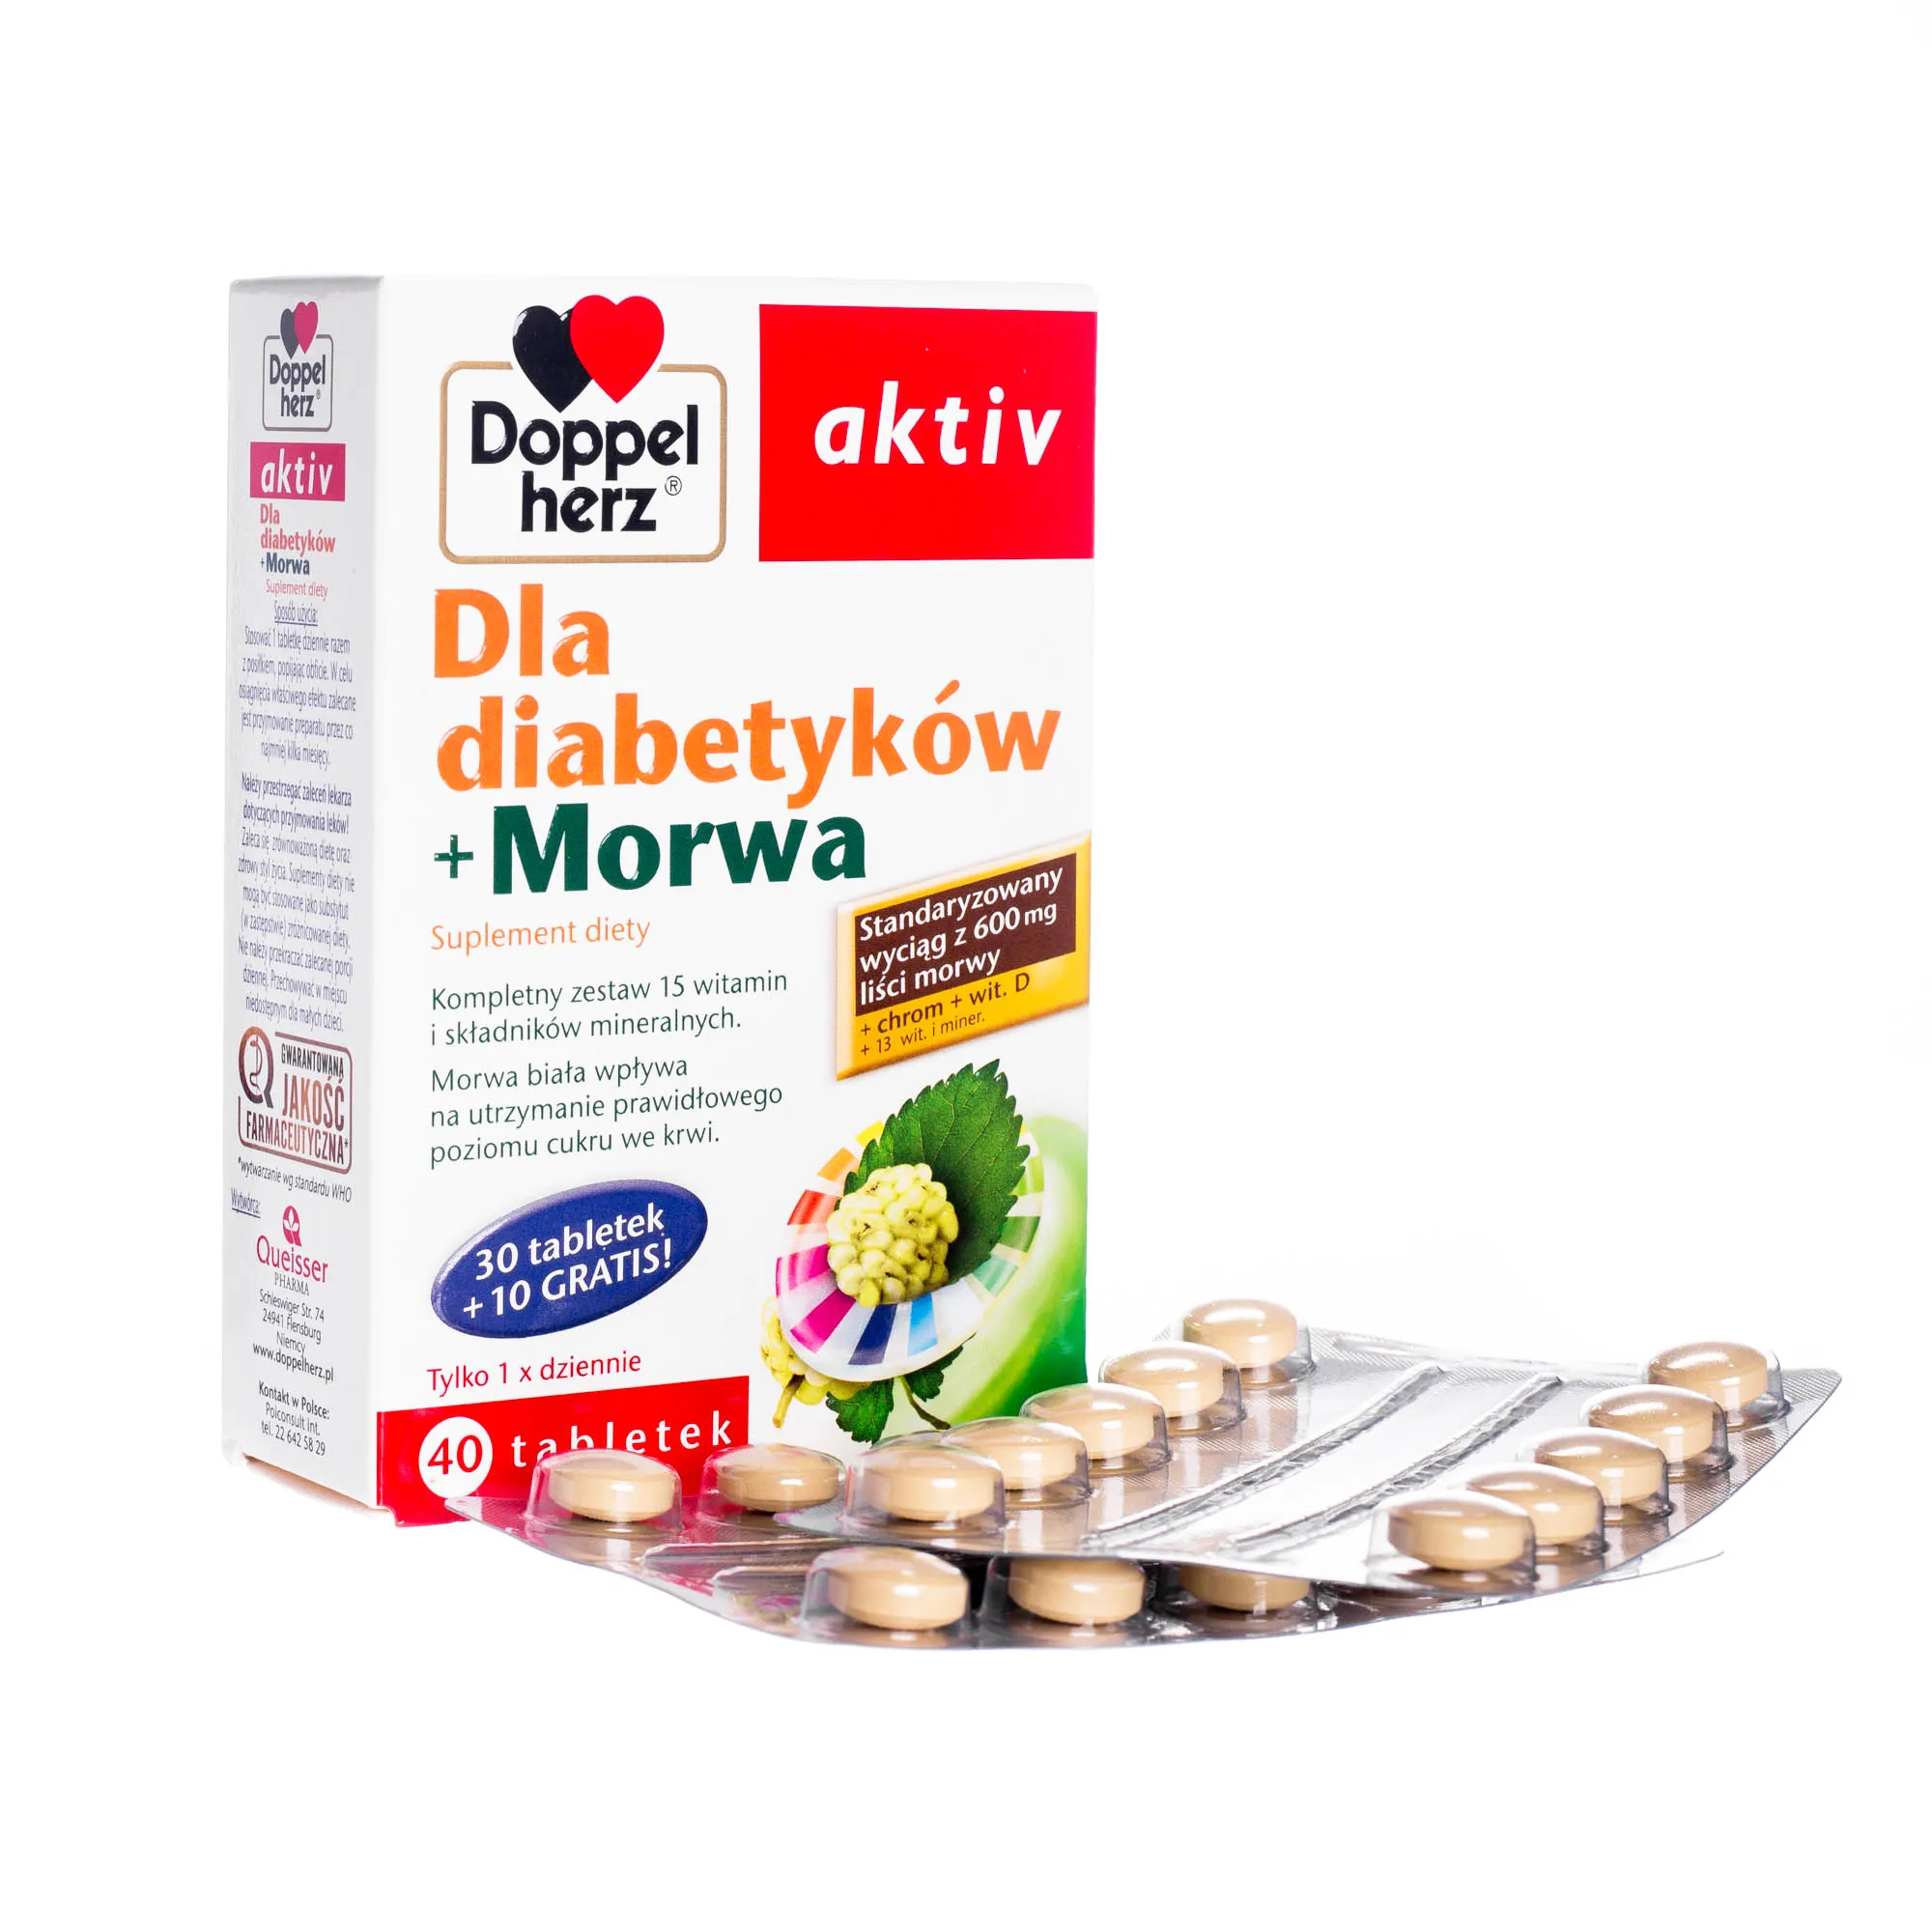 Doppelherz aktiv Dla diabetyków + Morwa, suplement diety 30 + 10 tabletek